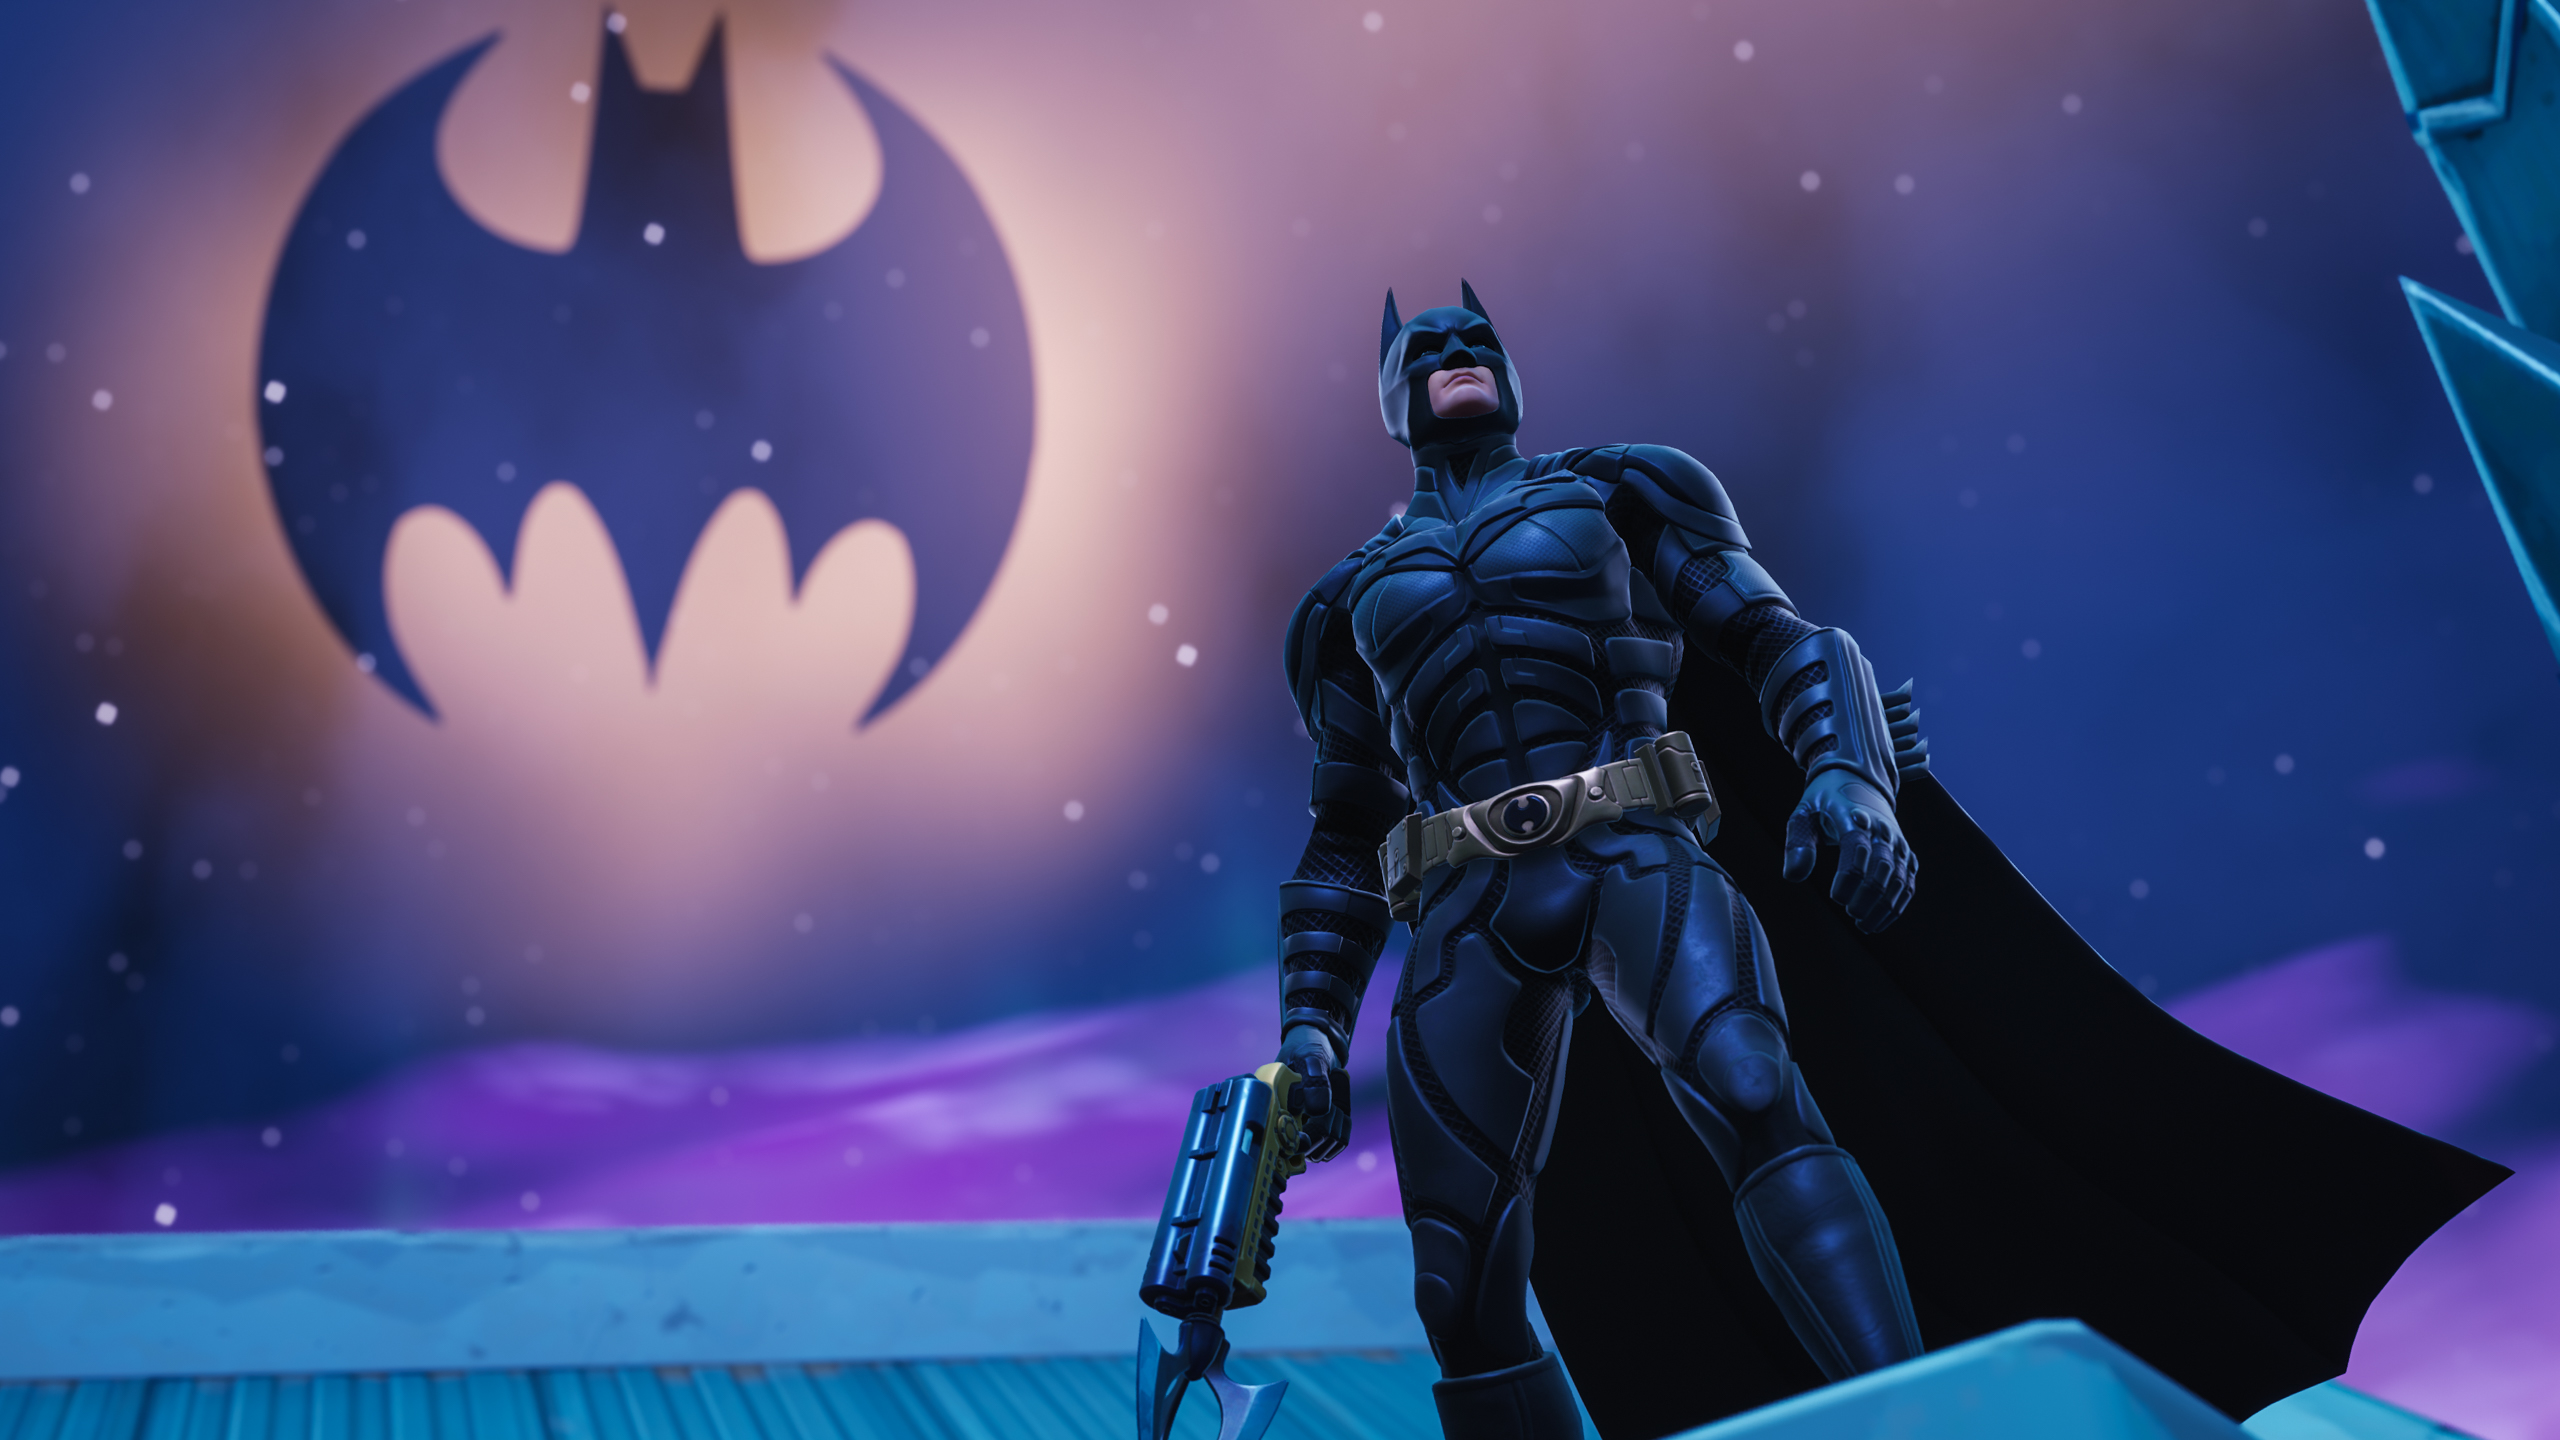 1080p wallpapers,batman,fictional character,justice league,action figure,superhero